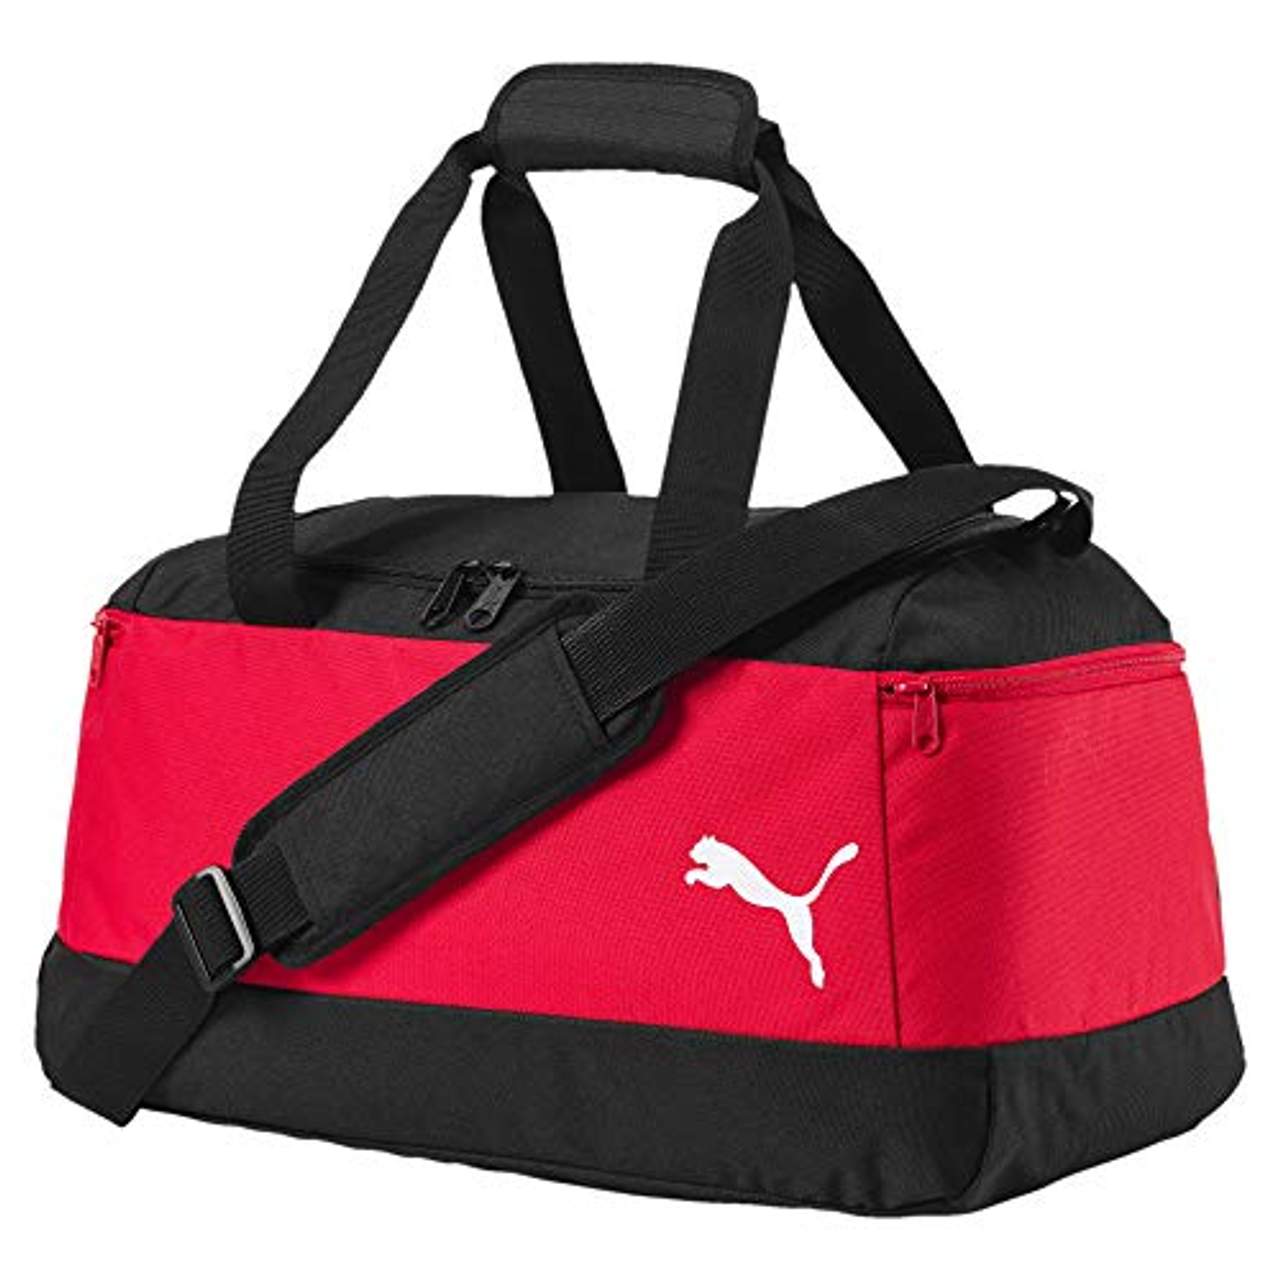 Puma Pro Training II S Bag Sporttasche